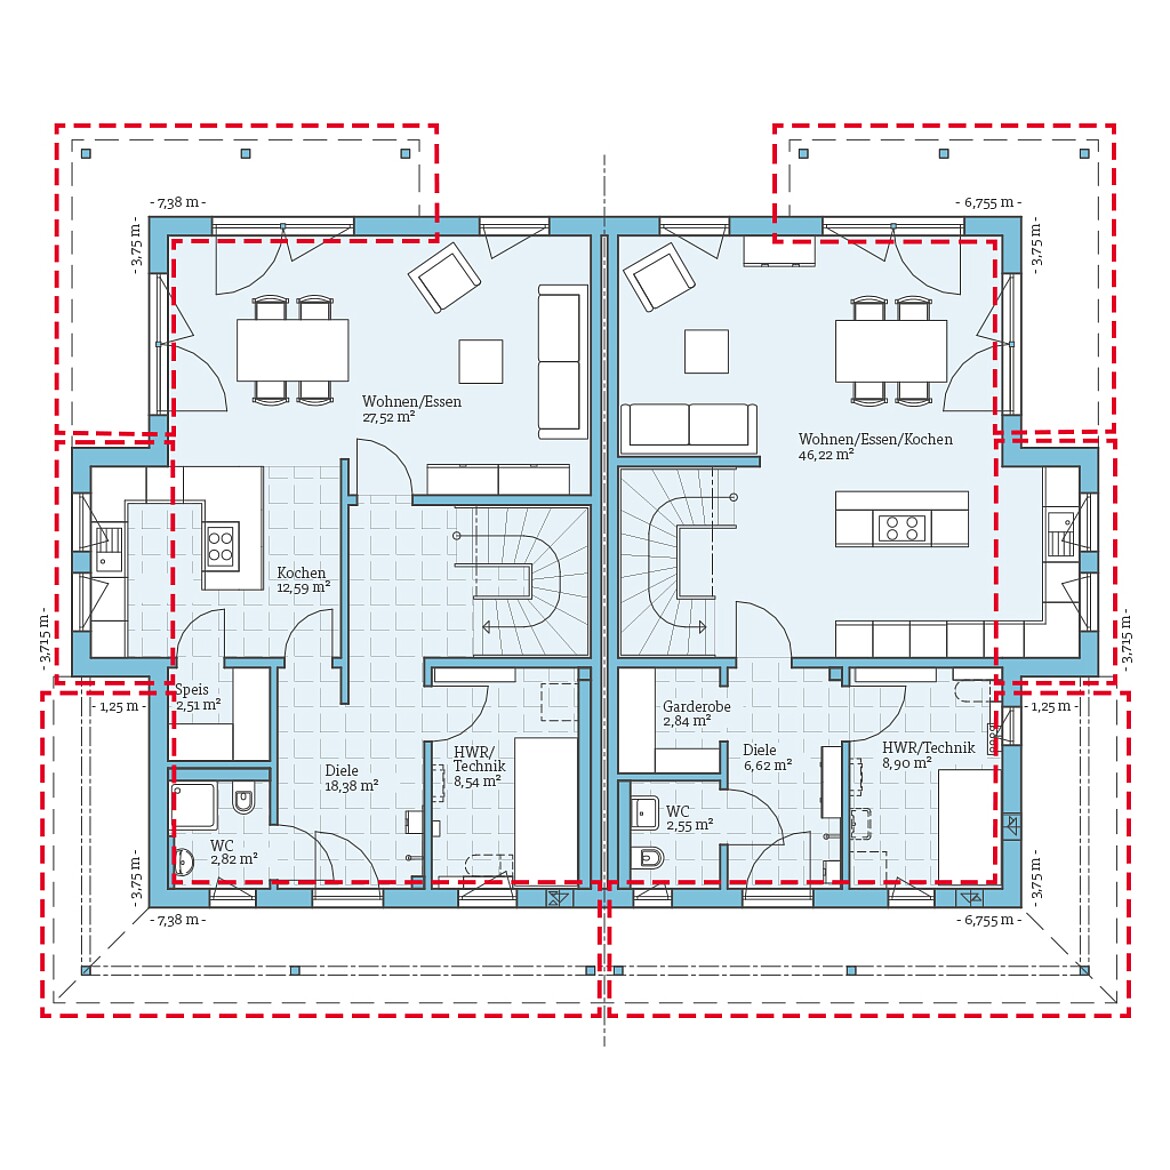 Prefabricated semi-detached house 137/126: Ground floor plan option